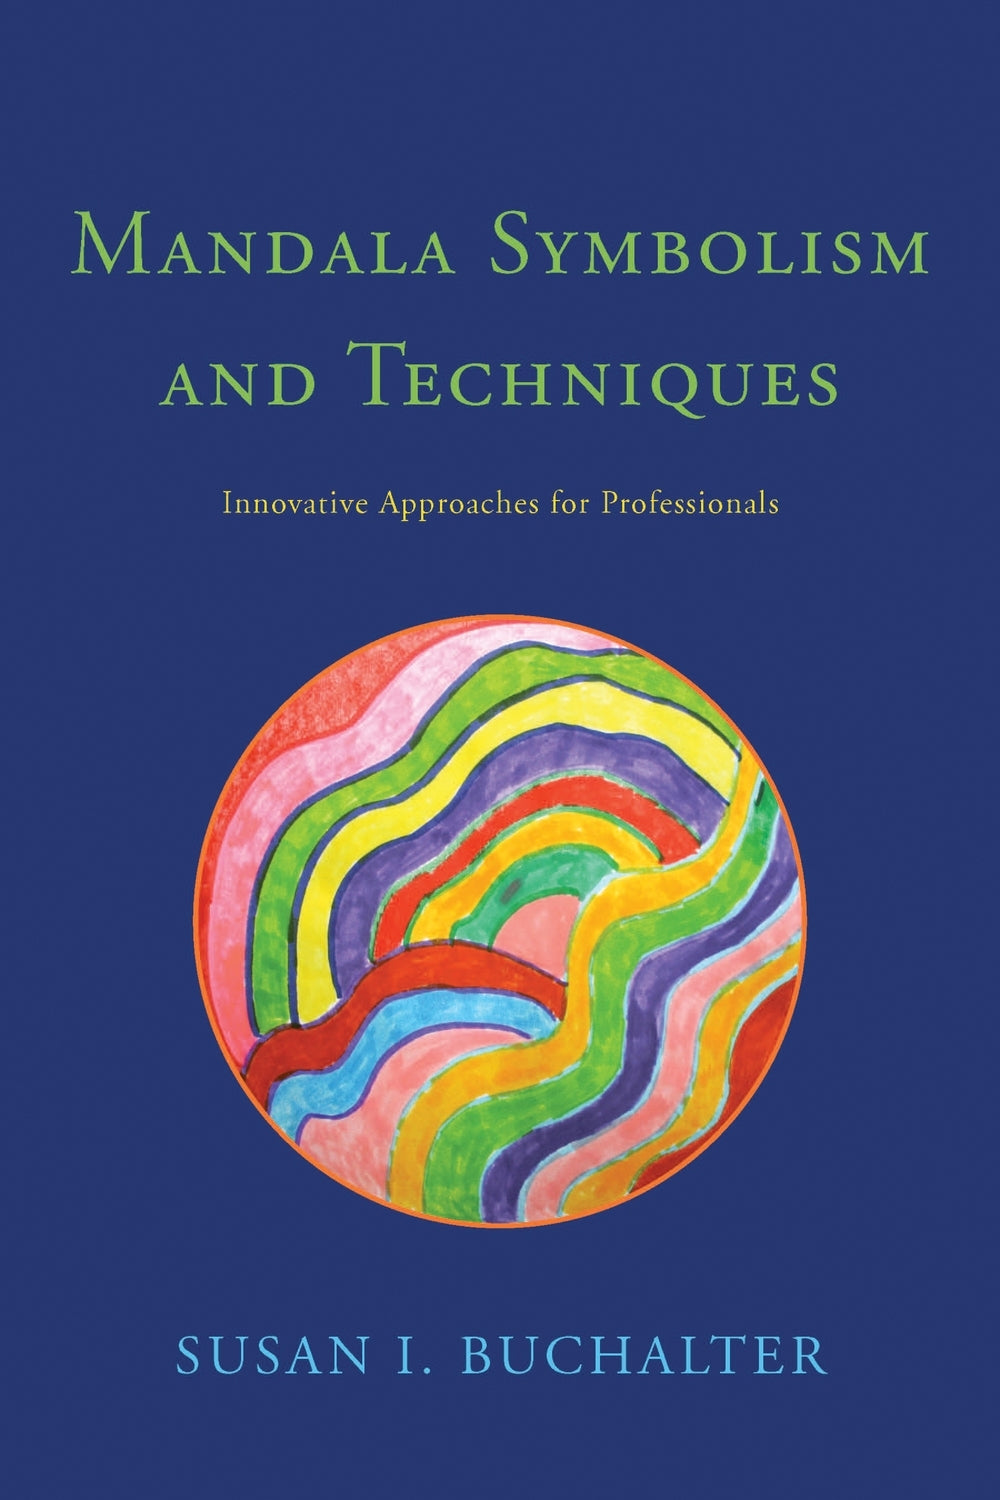 Mandala Symbolism and Techniques by Susan Buchalter